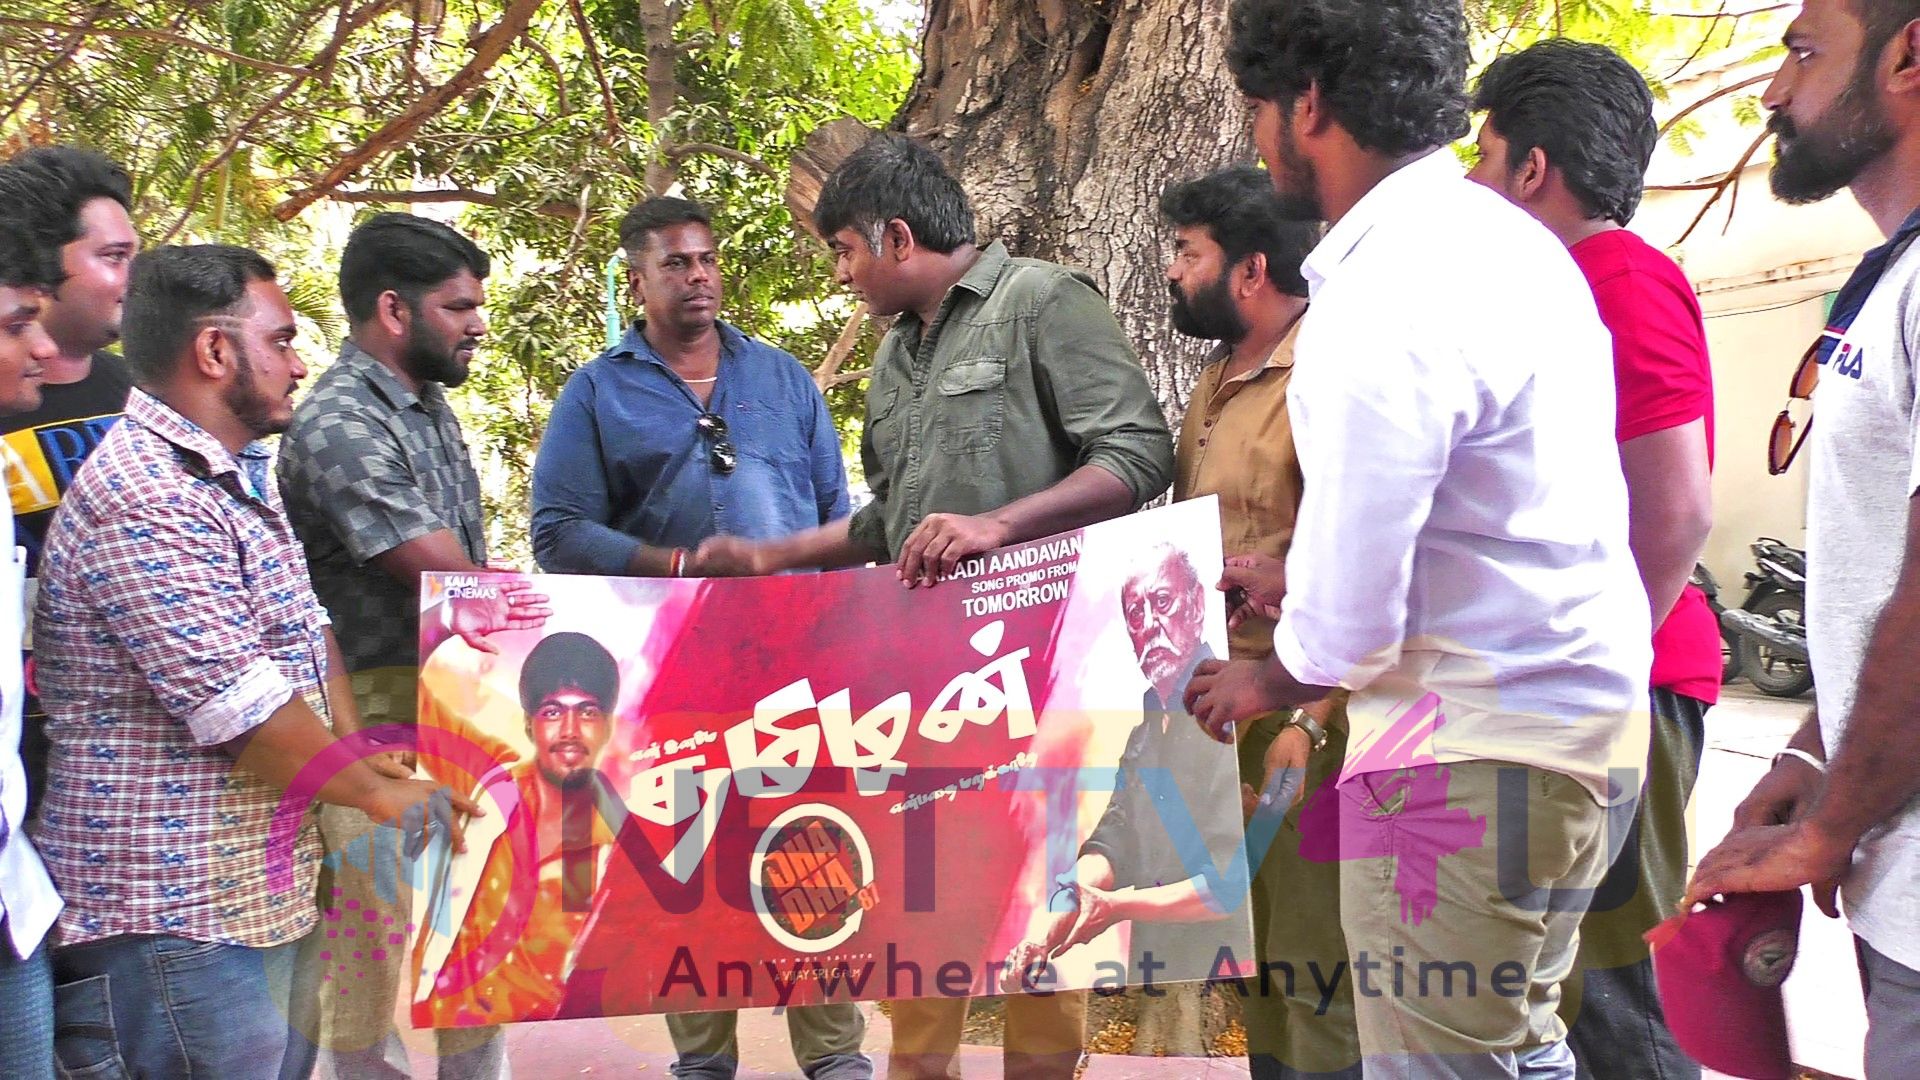 Actor Vijay Sethupathi Launched Aaradi Aandavan Song Promo Pics Tamil Gallery